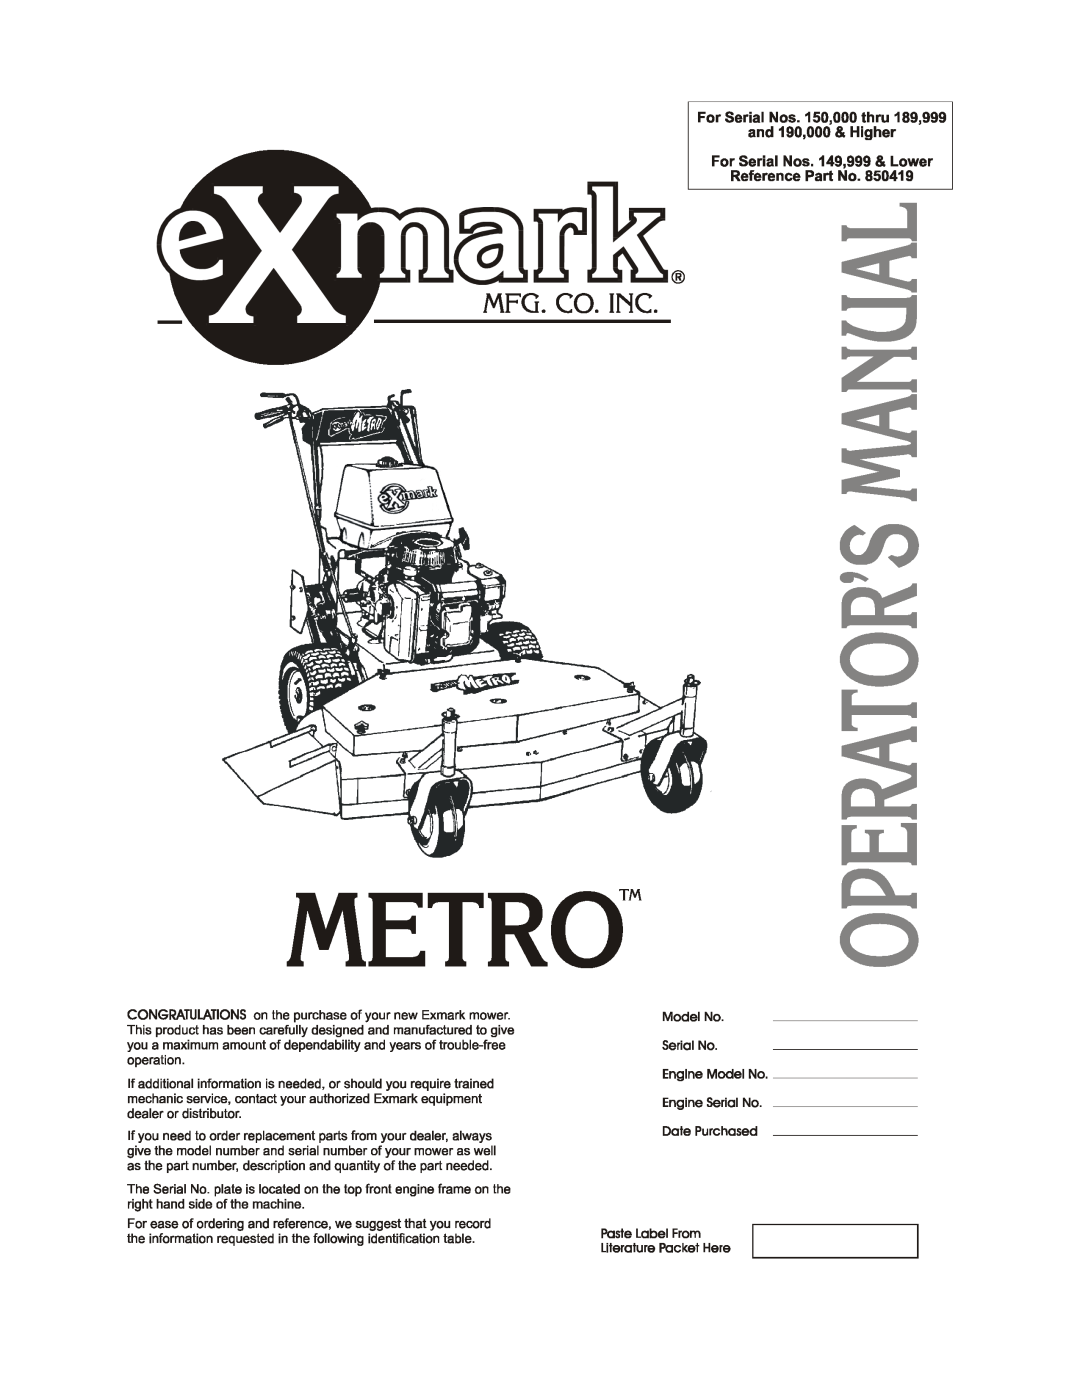 Exmark manual Lazer Z Models, For Serial Nos 850,000 & Higher Lazer Z LZZ Units, Part No. 4500-561Rev. F 